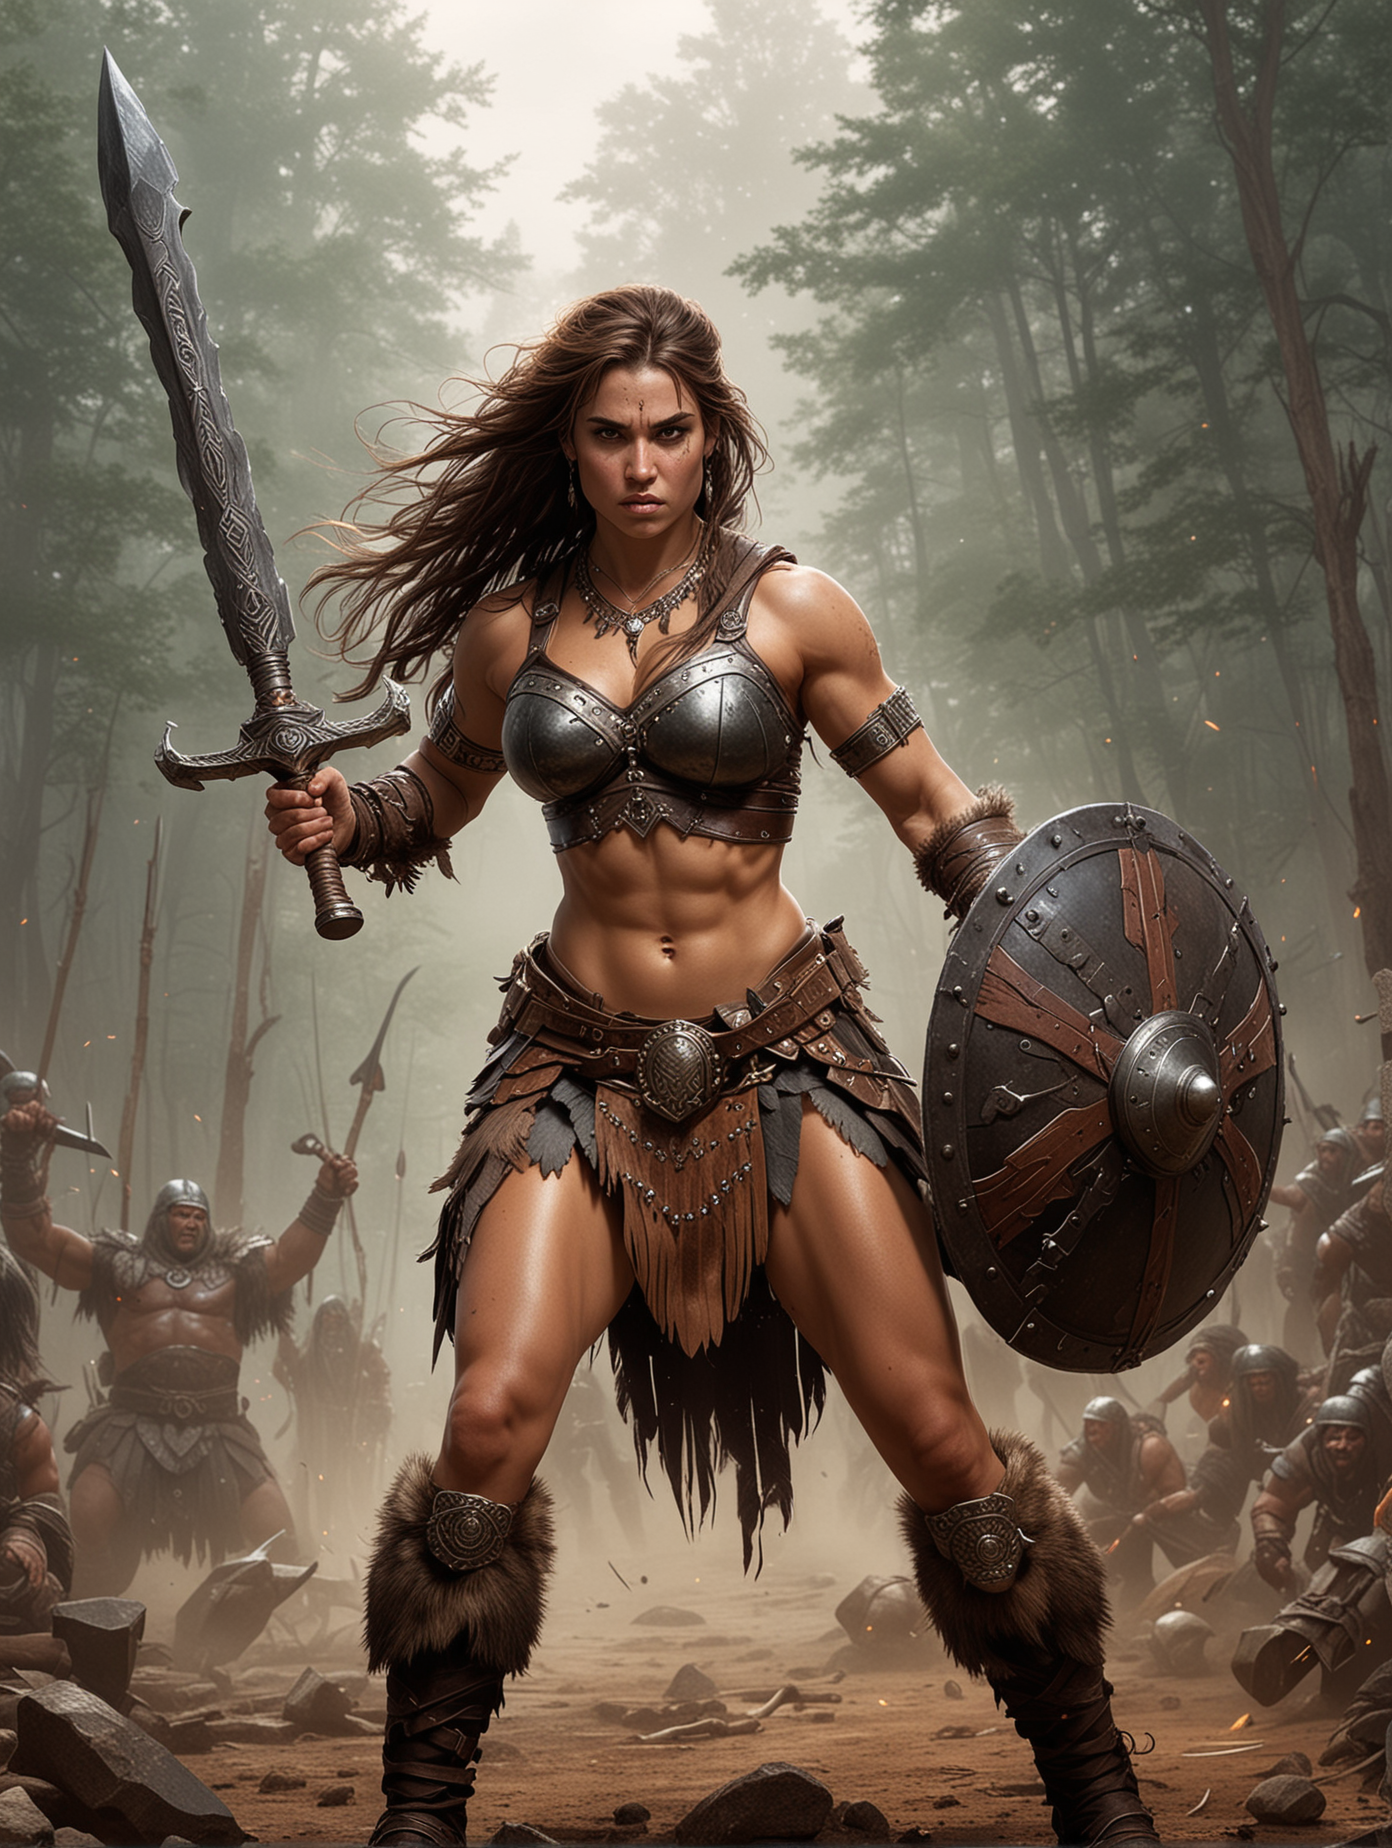 Sturdy Barbarian Woman Warrior wielding a Massive Mace with Tribal Ornaments